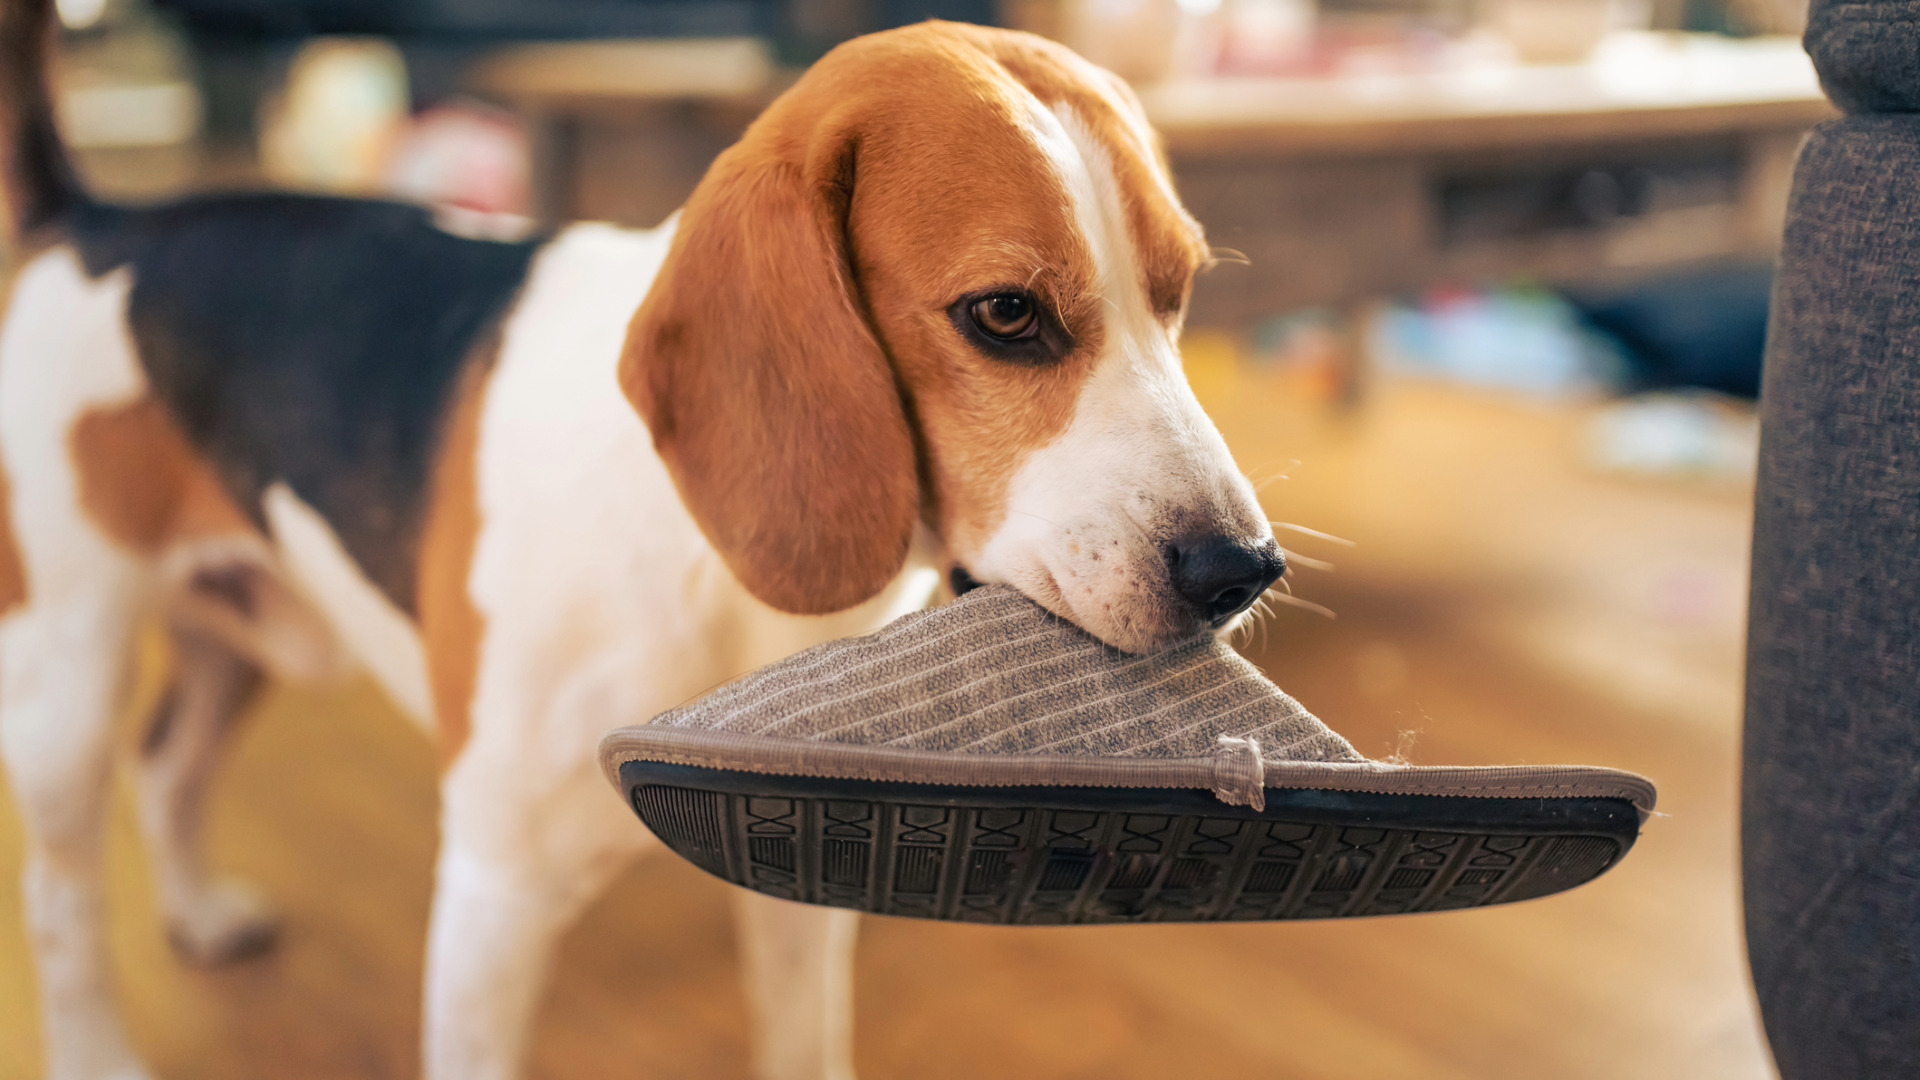 a beagle carries a slipper in their mouth